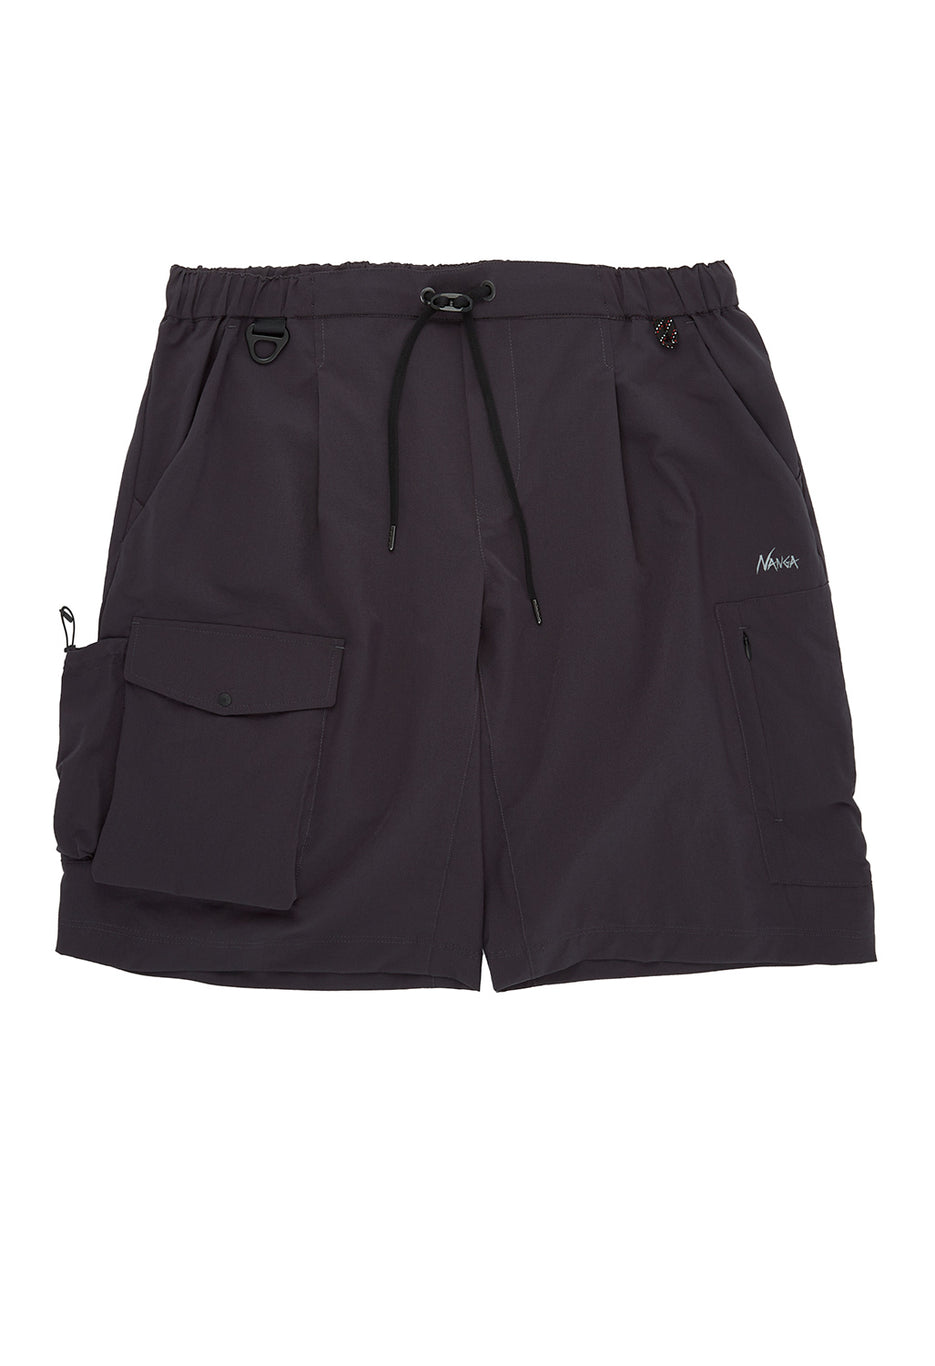 Nanga Men's Dot Air Utility Pocket Cargo Shorts - Black